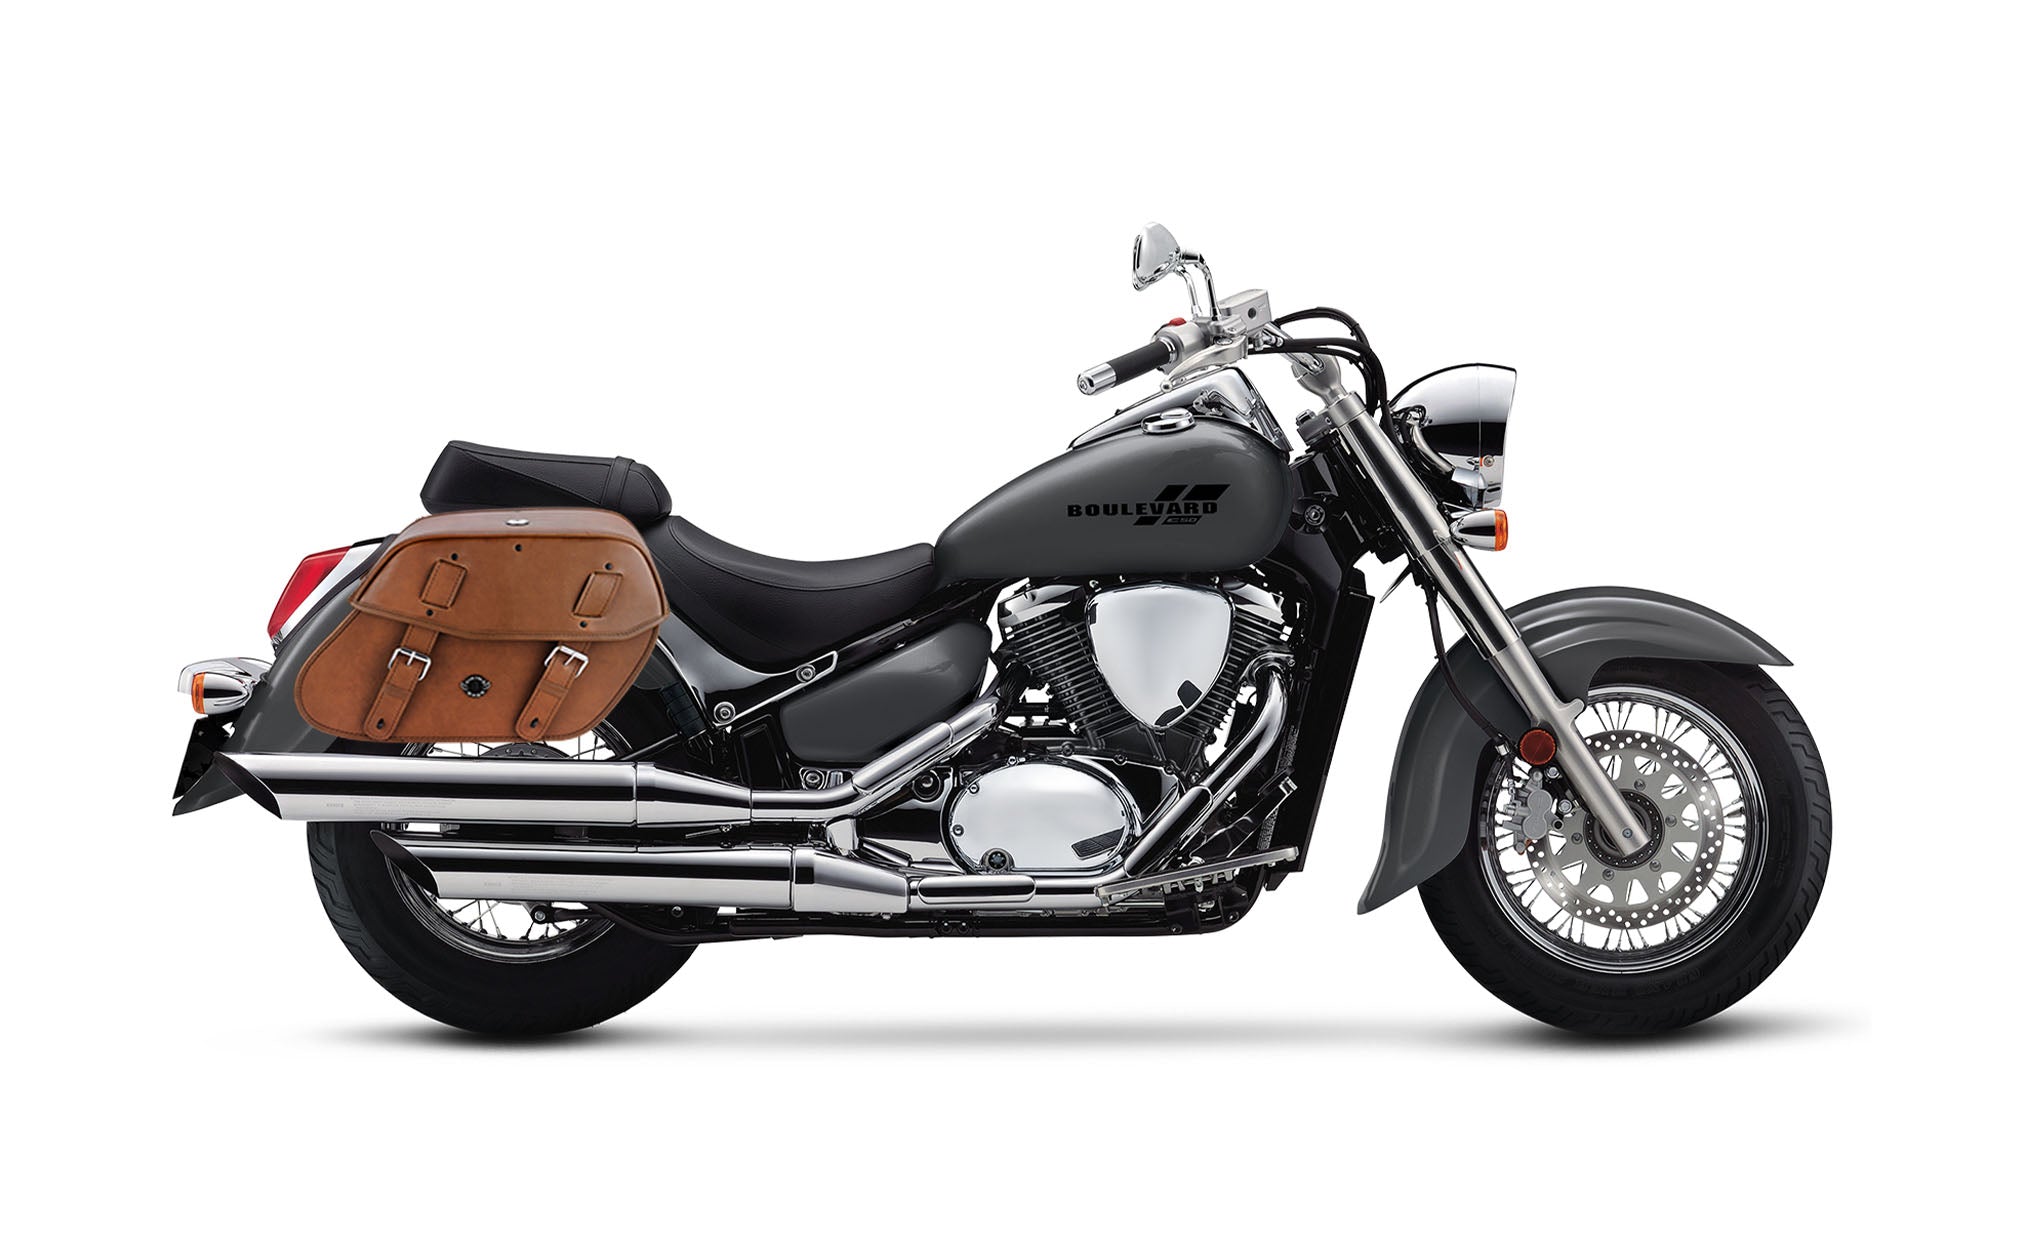 Viking Odin Brown Large Suzuki Boulevard C50 Vl800 Leather Motorcycle Saddlebags on Bike Photo @expand